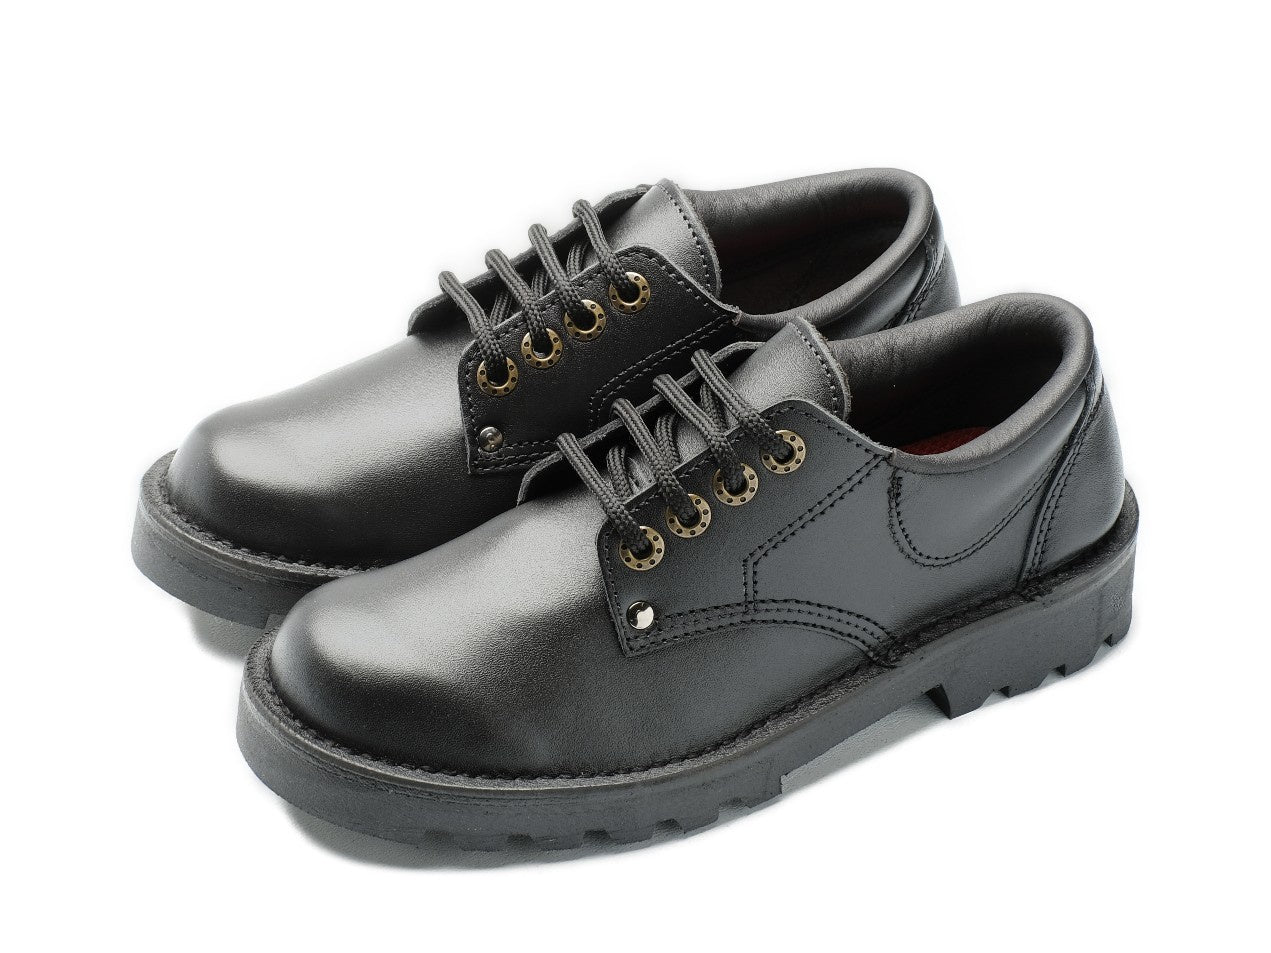 McKinlays Delta College Shoes - Thomson's Suits Ltd - Black - 3 - 63266